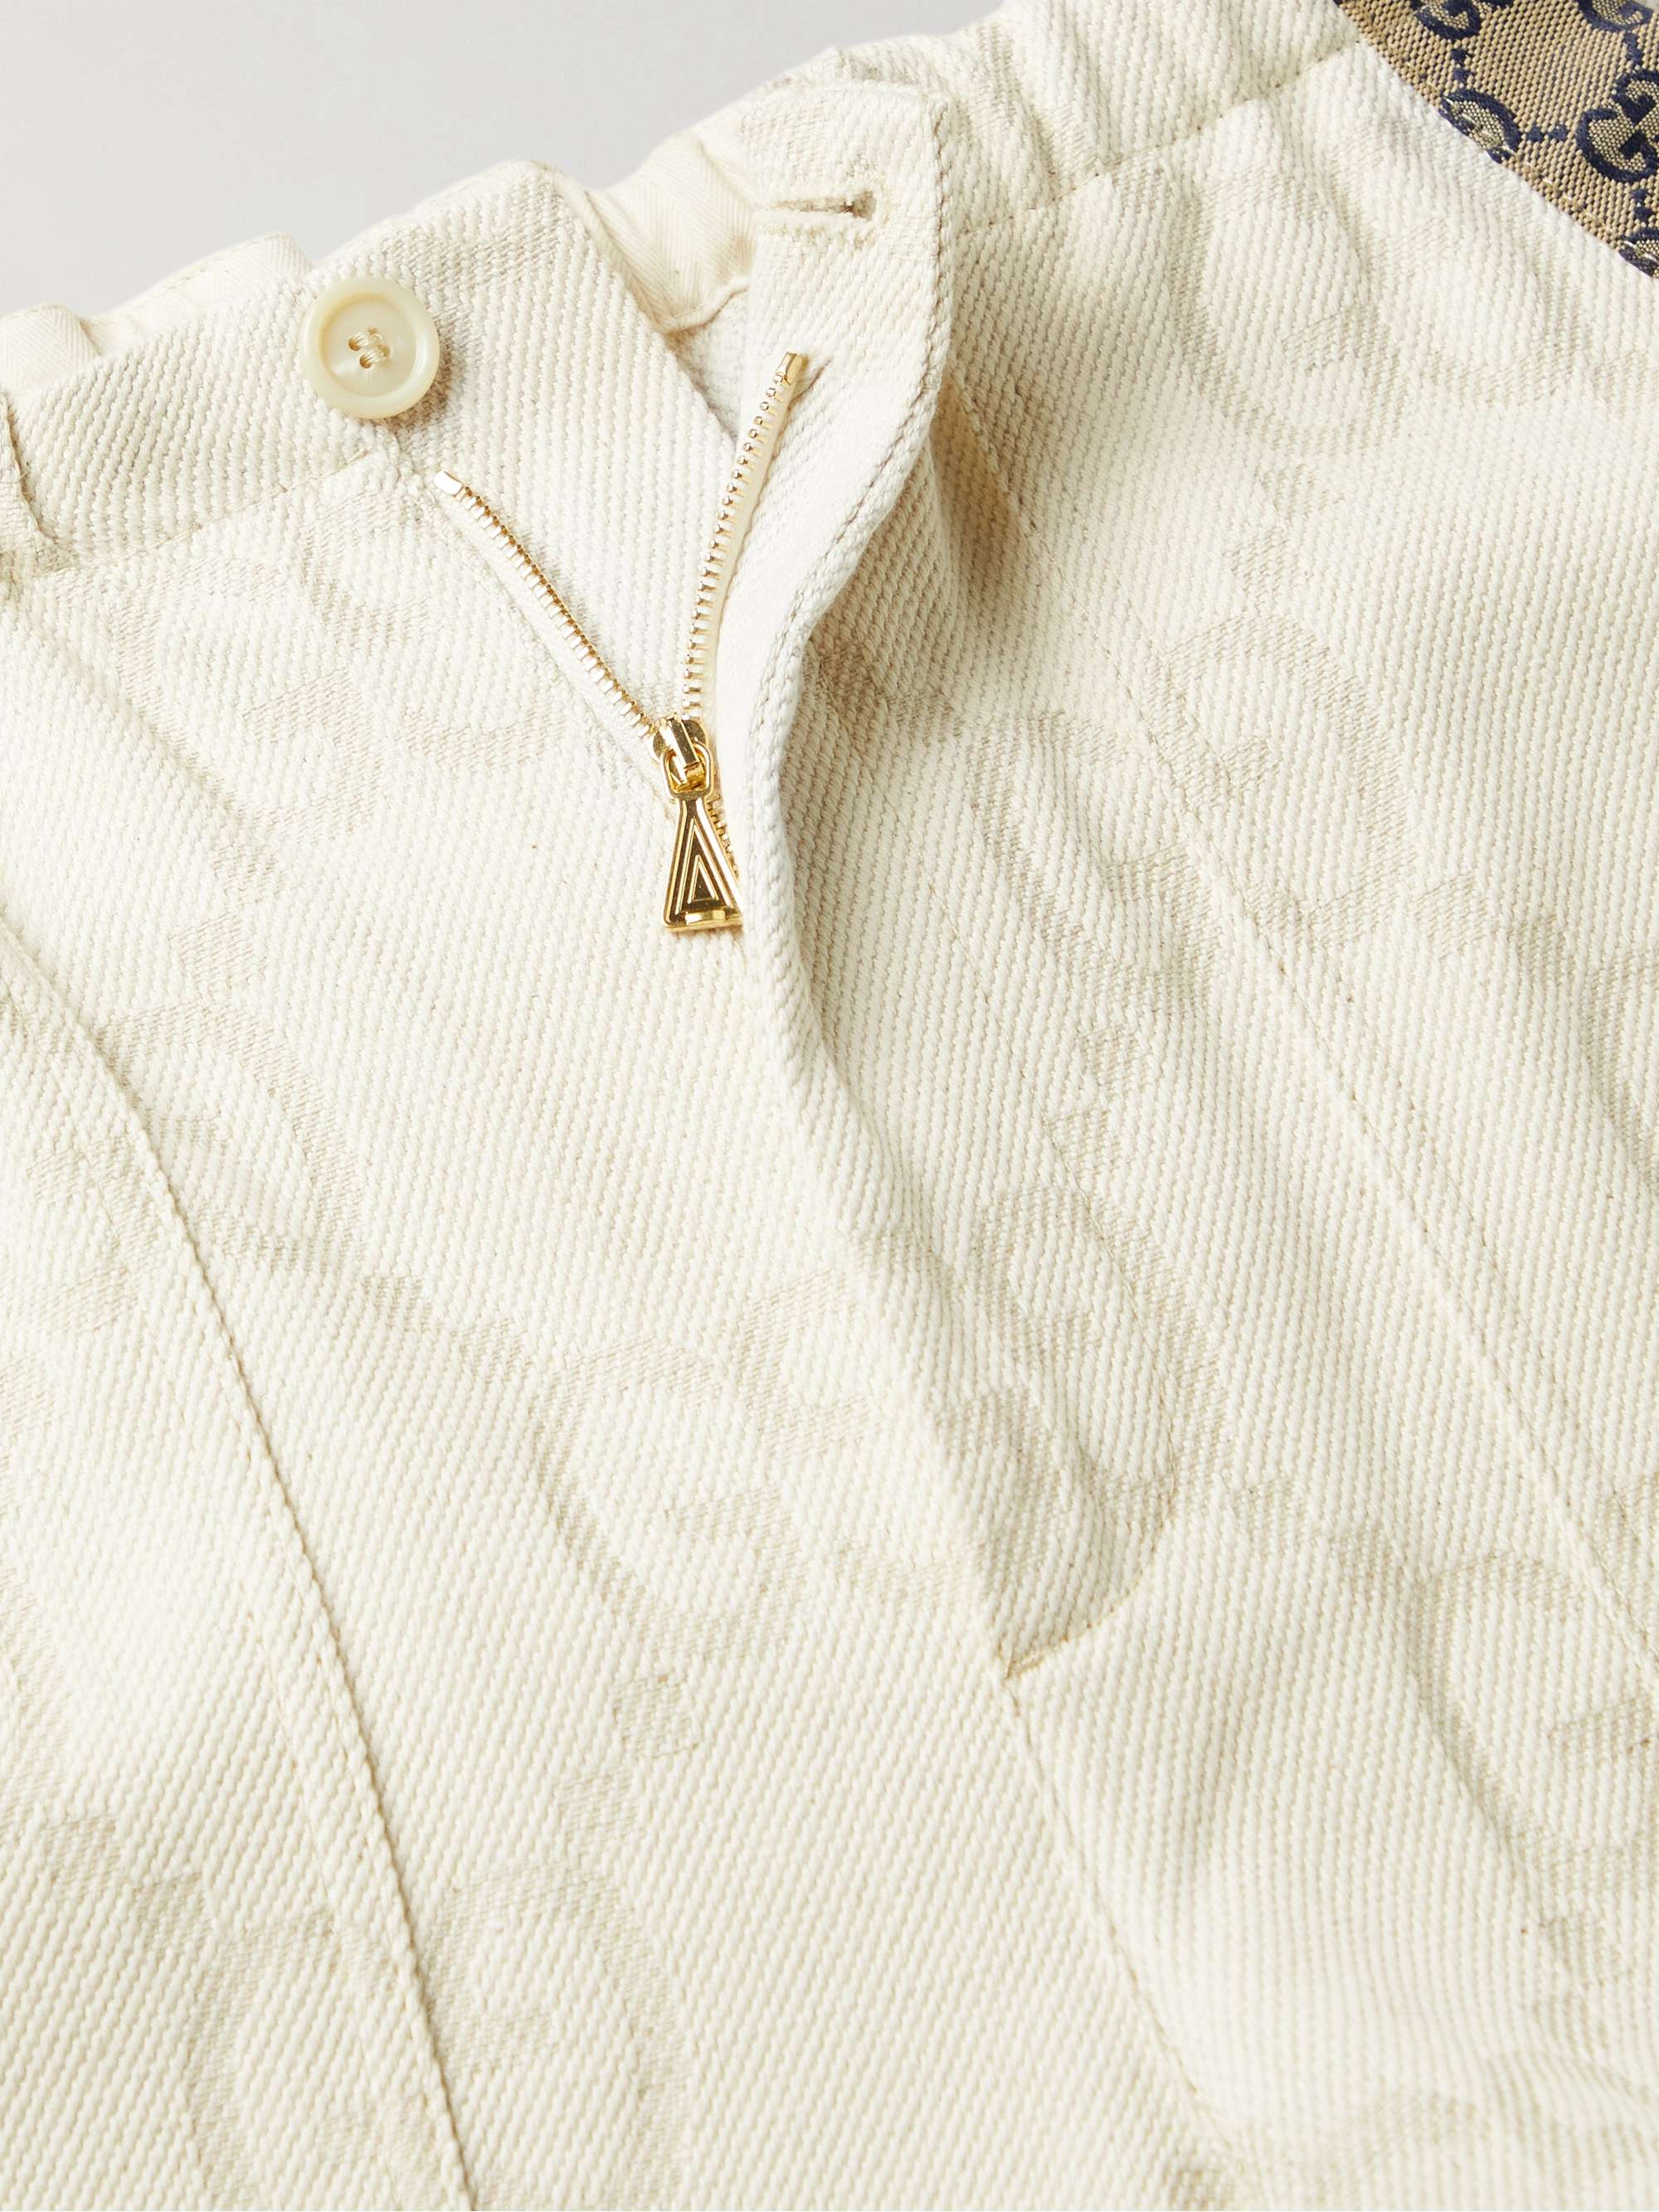 GUCCI Webbing-Trimmed Logo-Jacquard Cotton-Blend Canvas Trousers